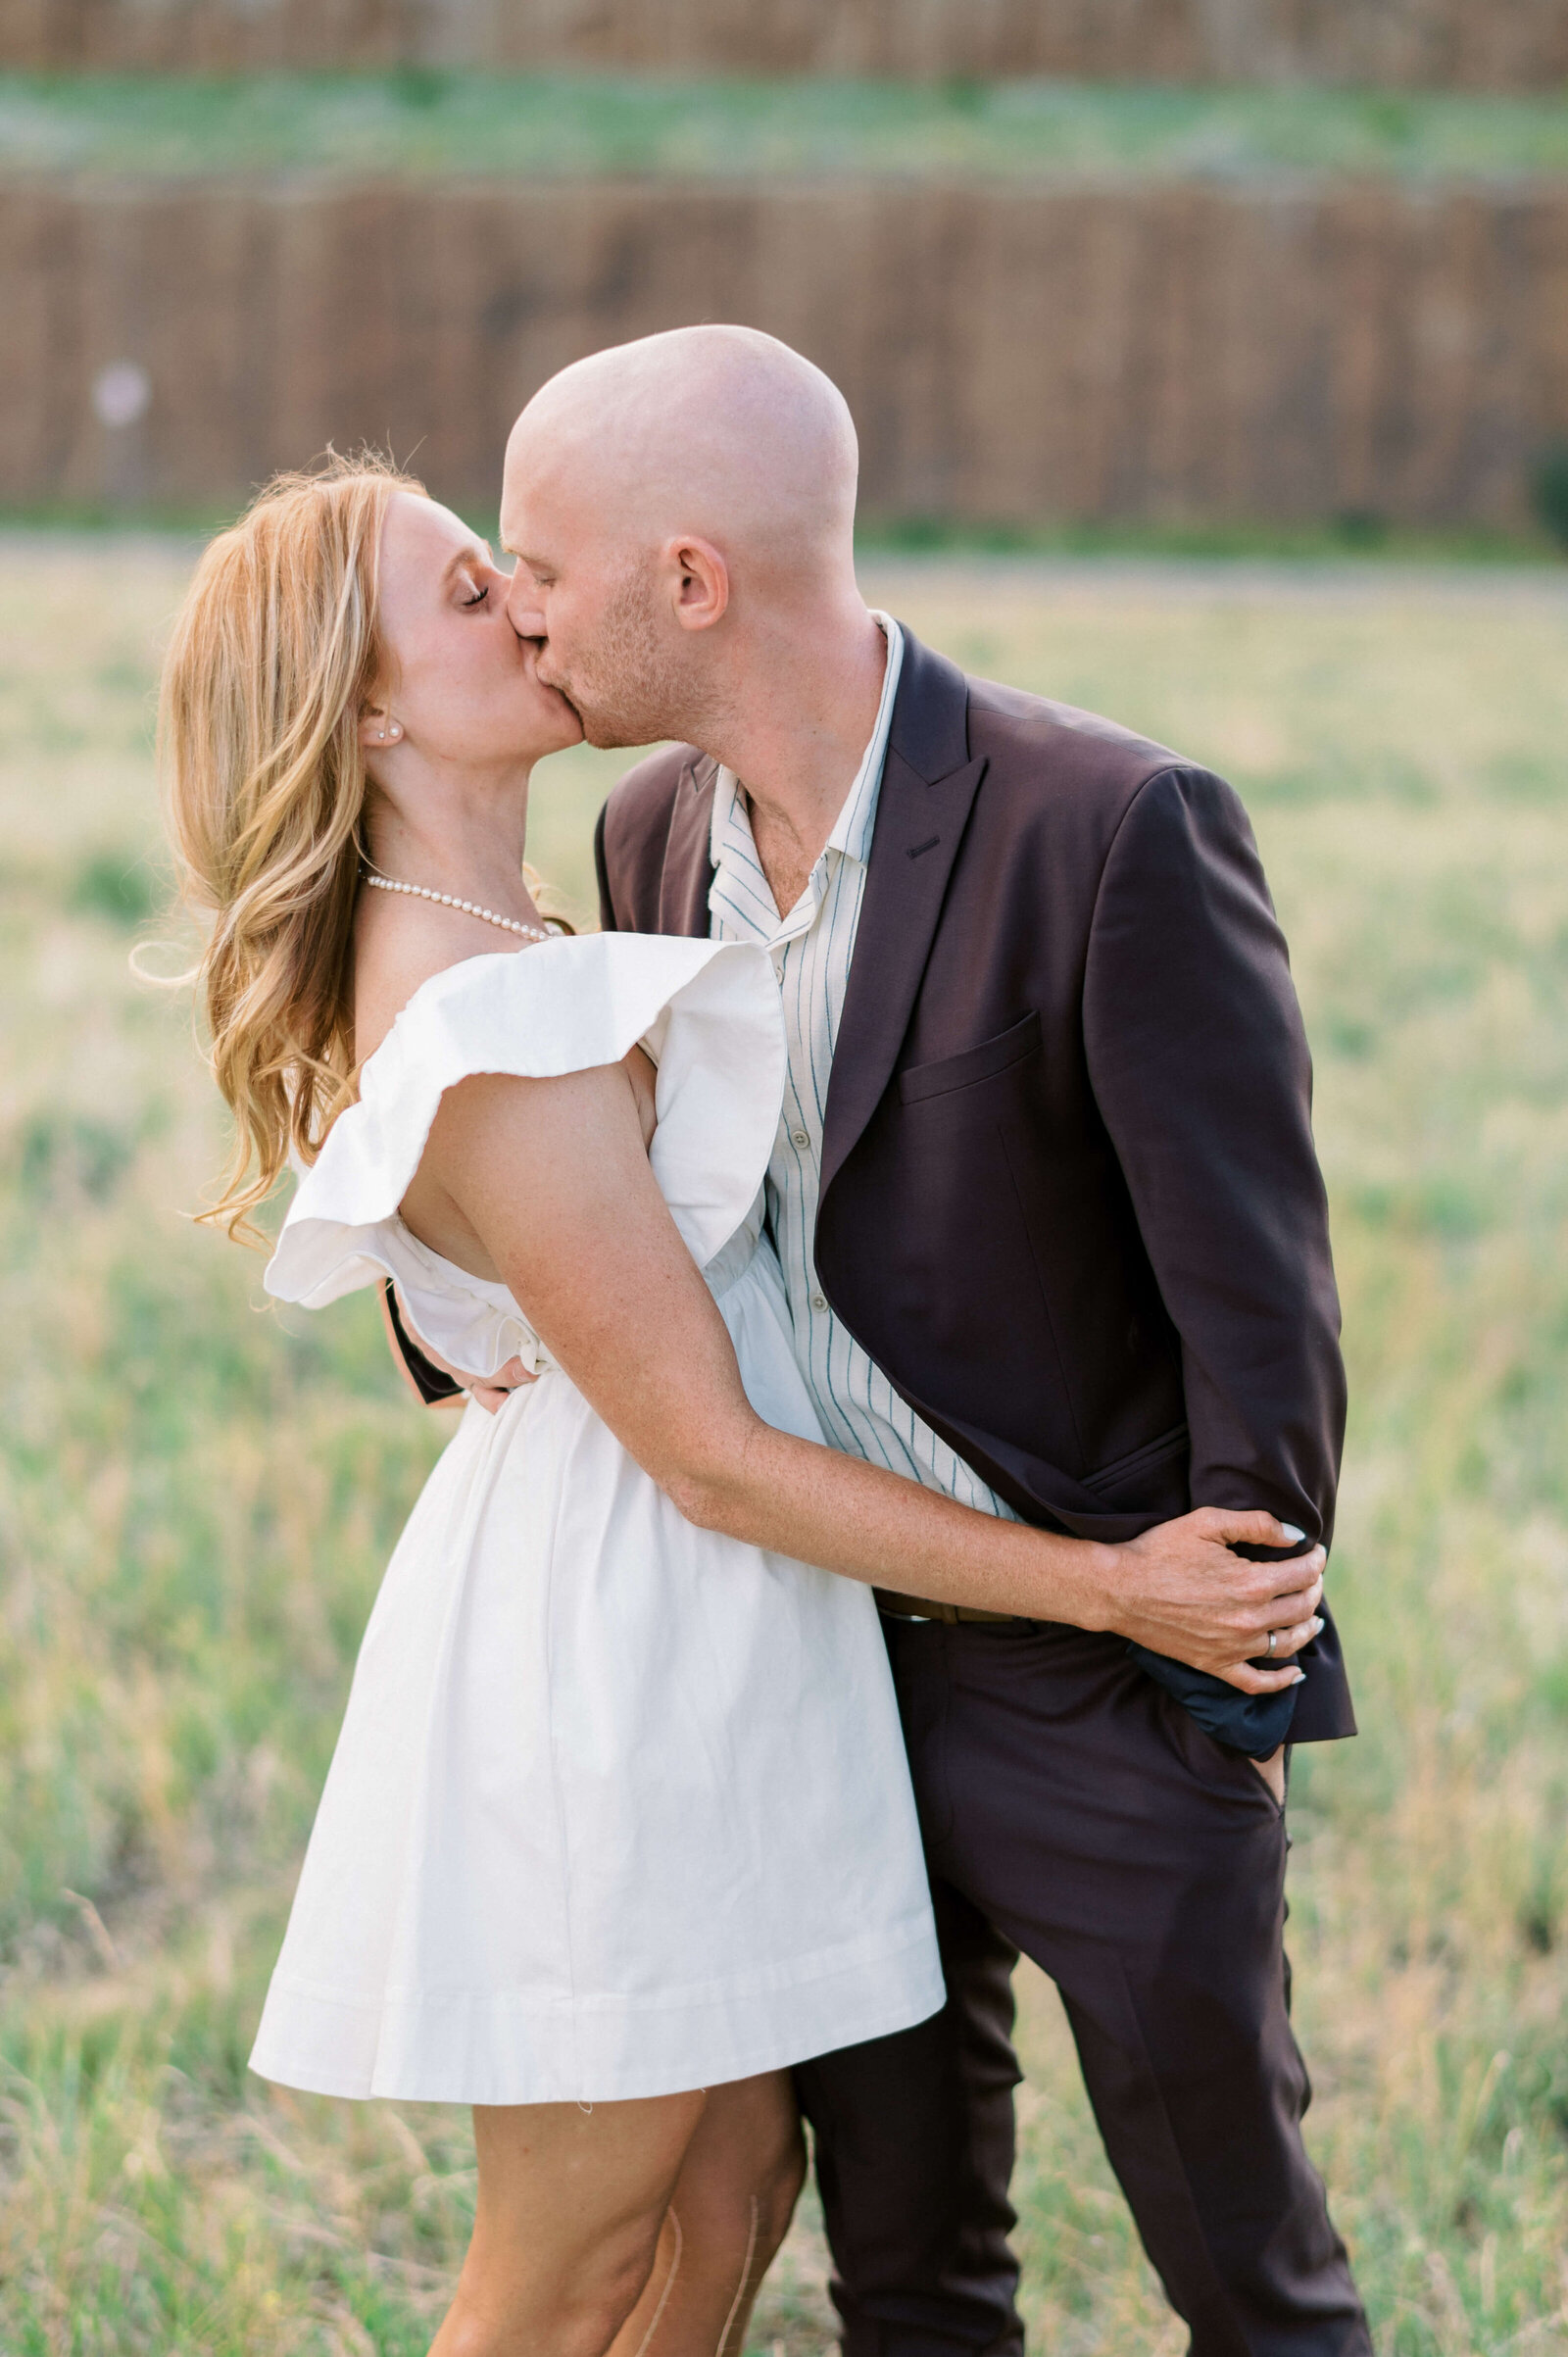 Virginia Wedding photographer captures a romantic kiss between an engaged couple